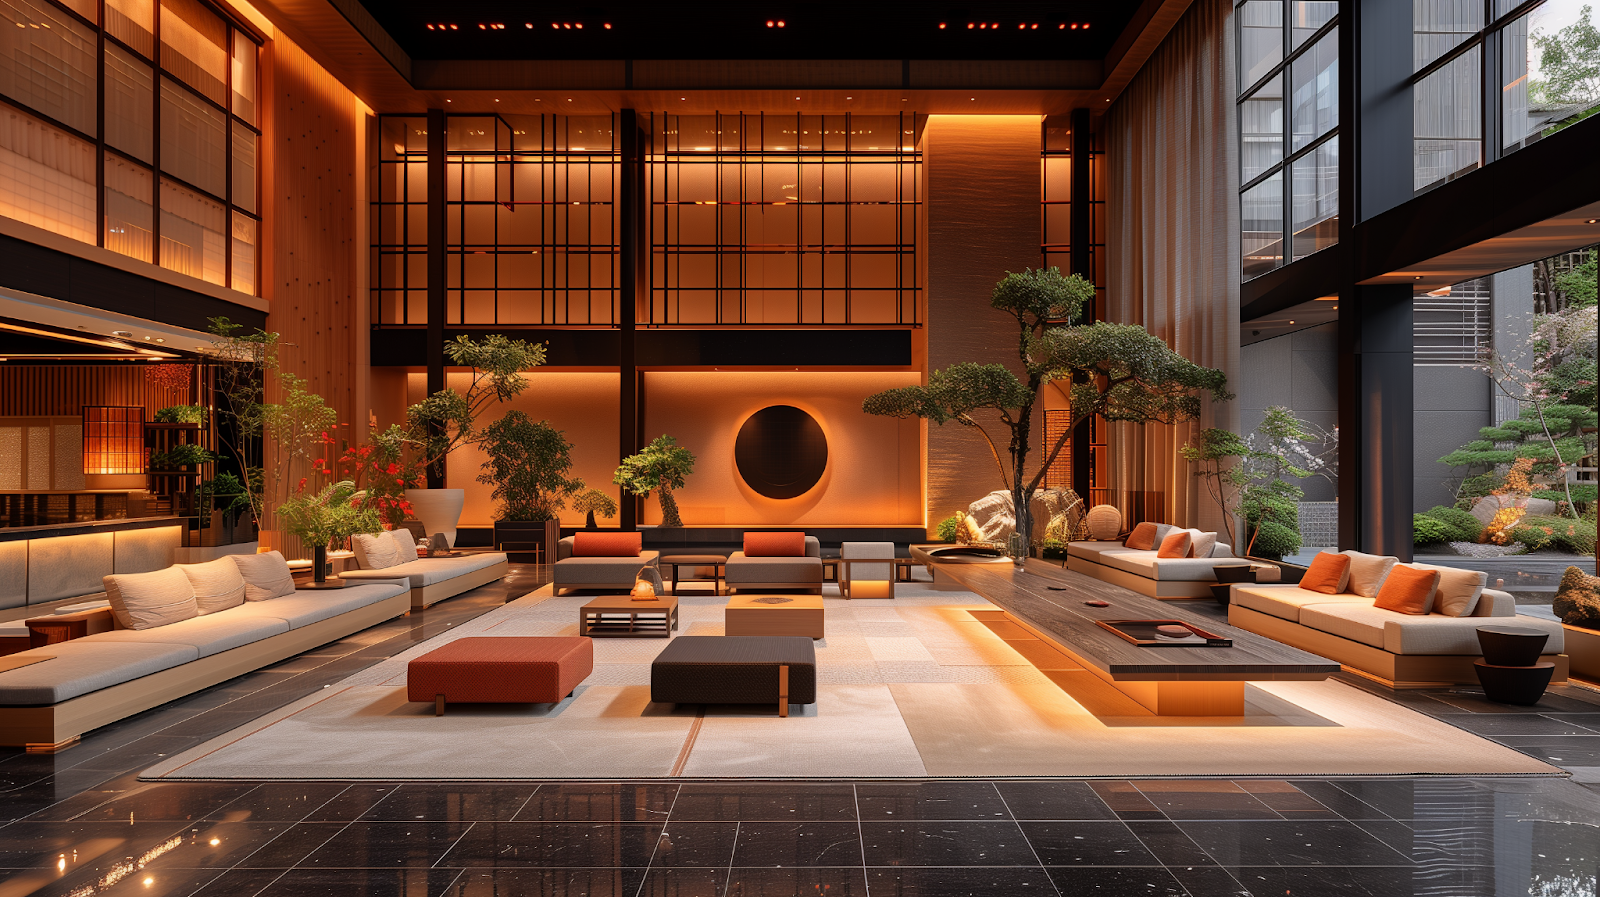 Vibrant Tokyo boutique hotel lobby with minimalist design